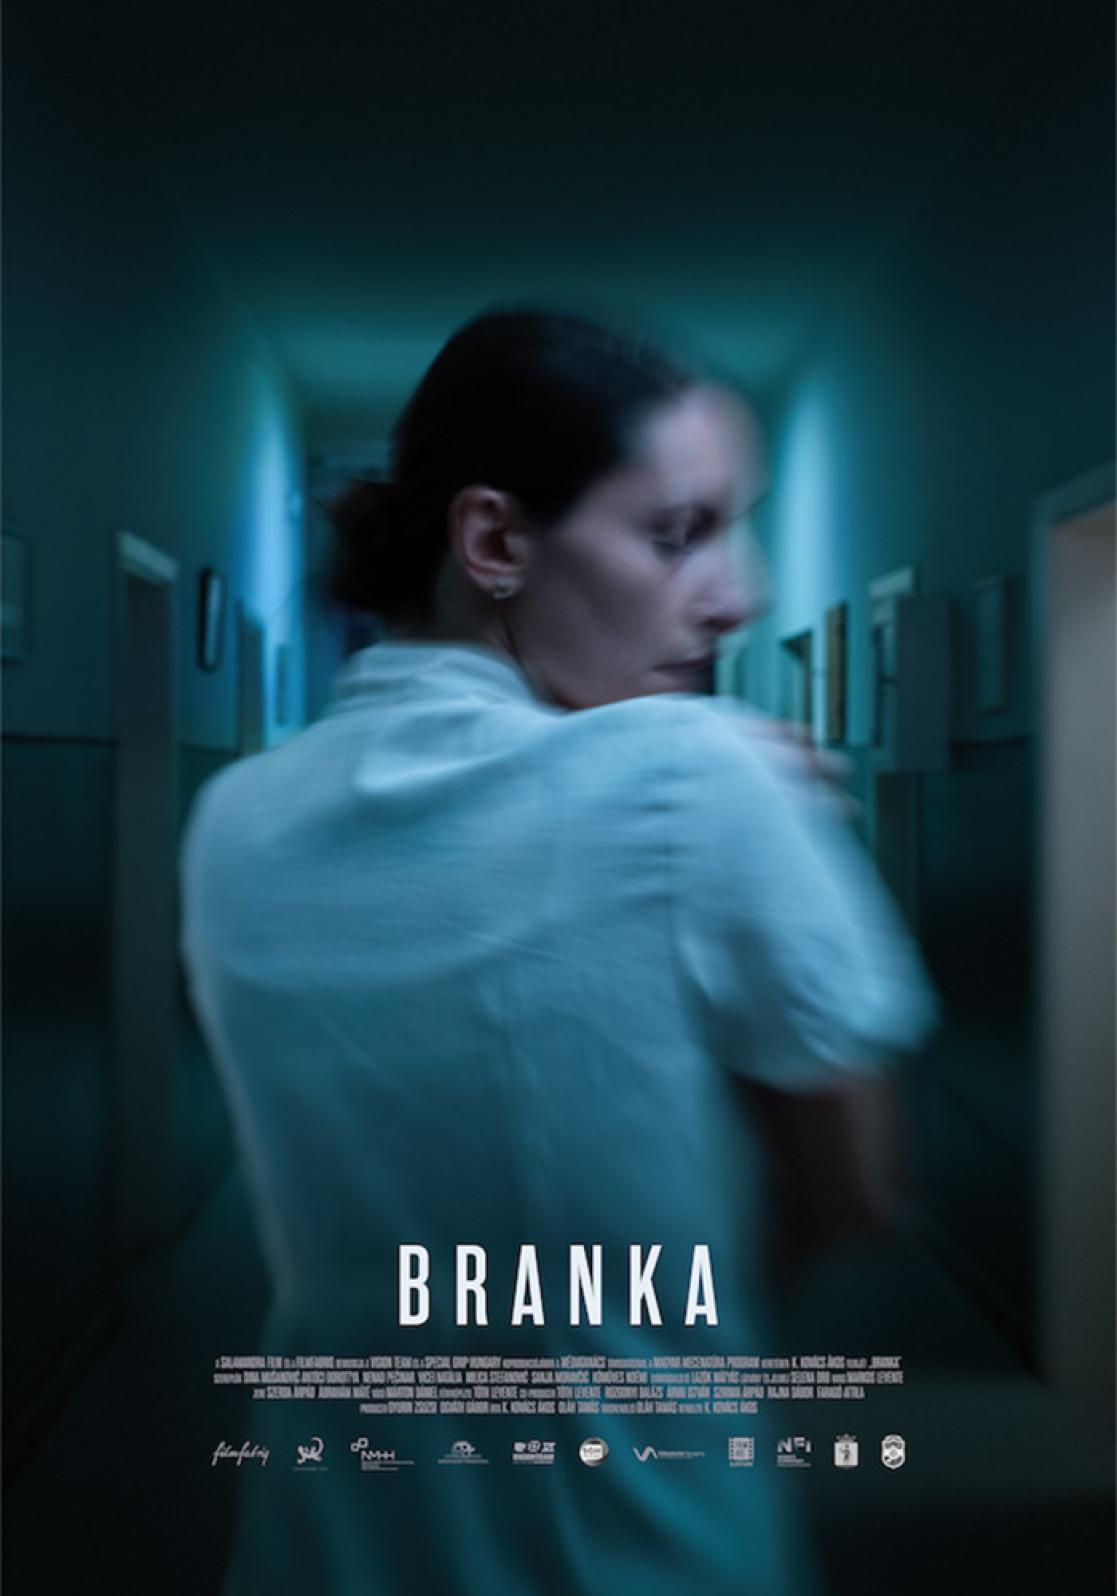 Branka-poster resized